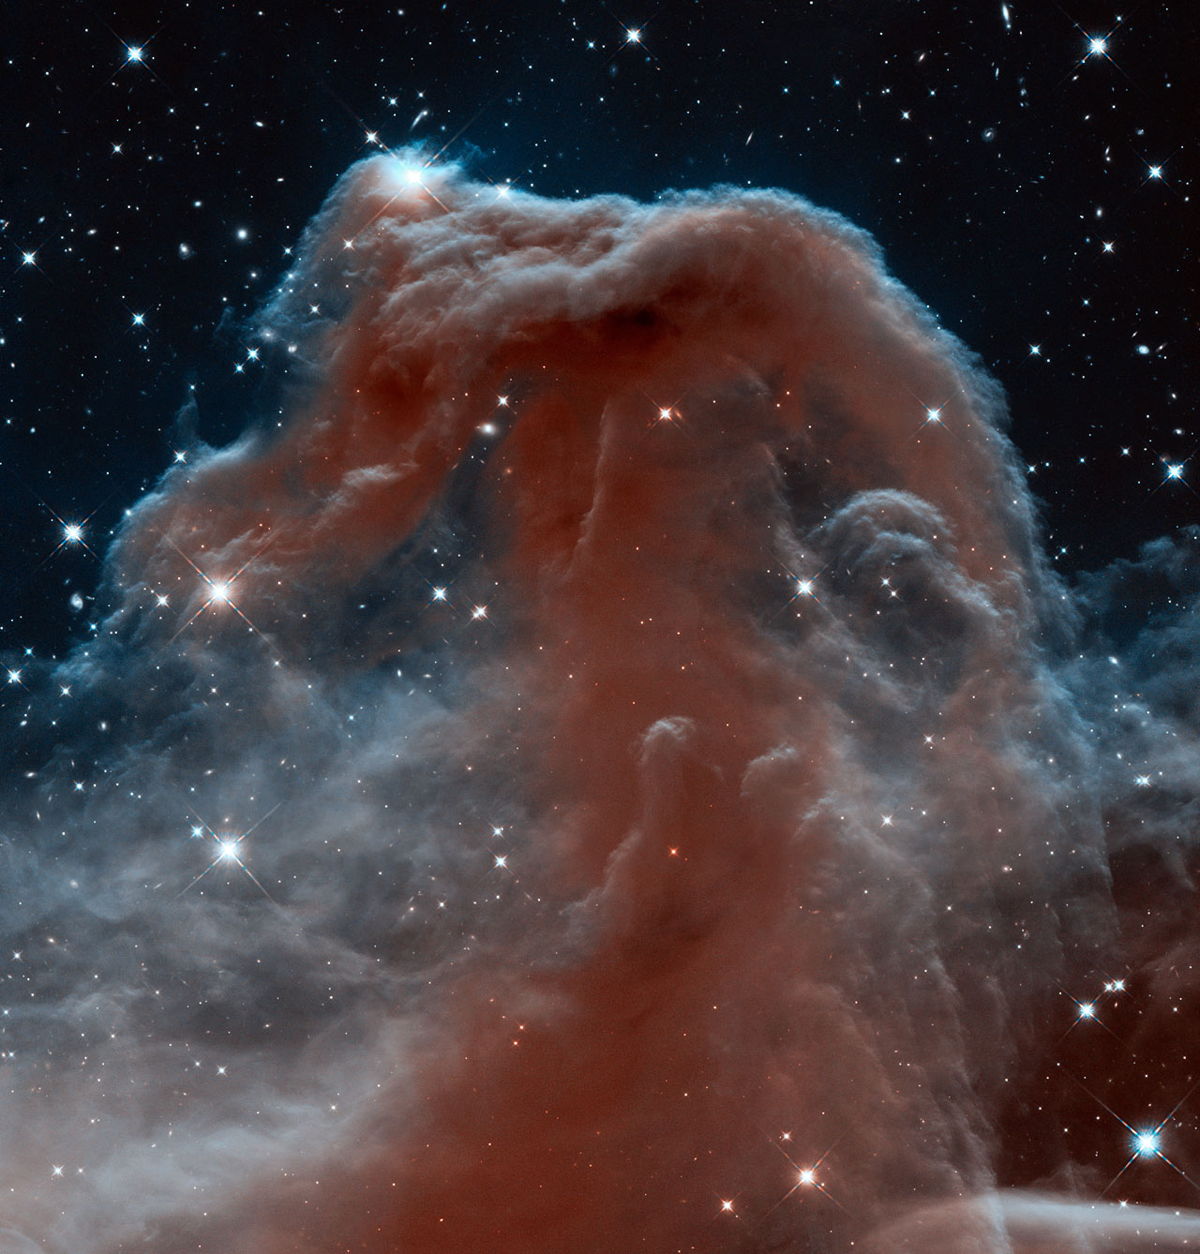 Stars Glitter Like Diamonds in Spectacular Hubble Telescope Photo